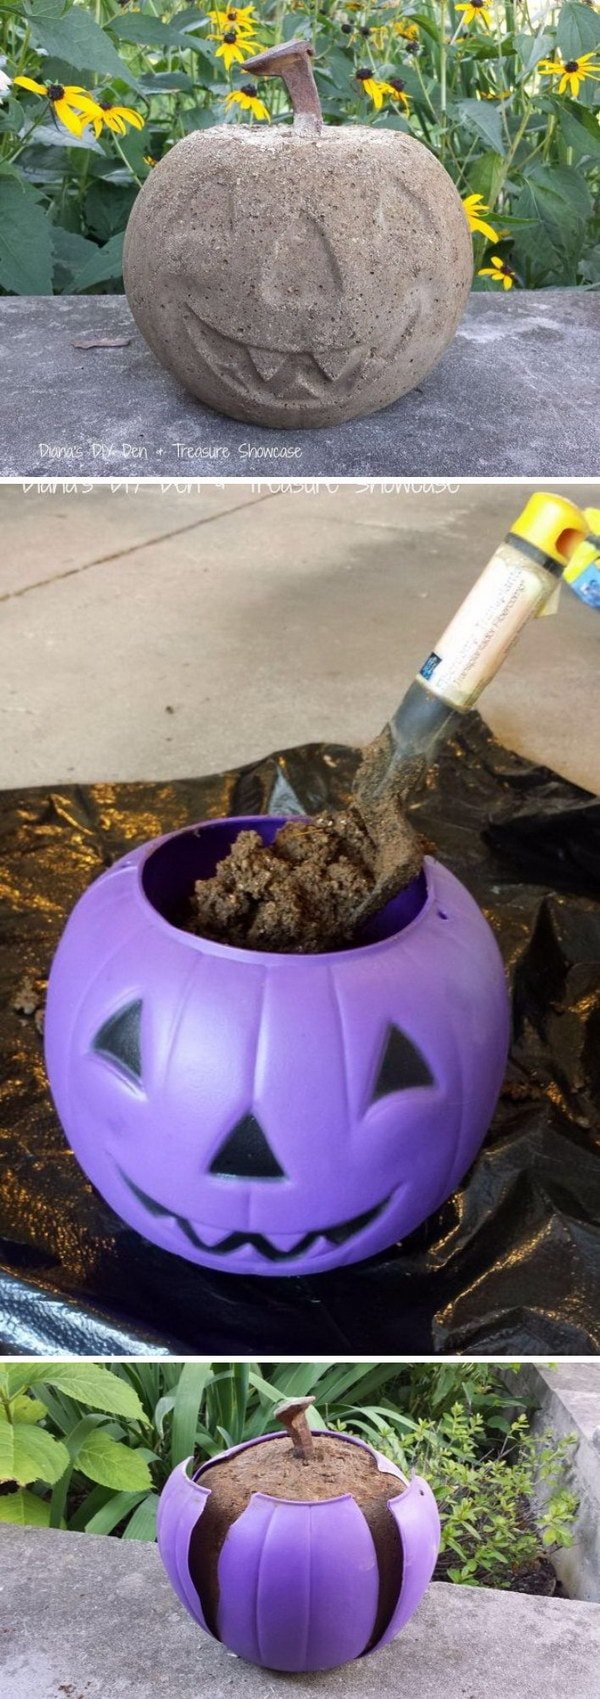 DIY Halloween Concrete Pumpkins